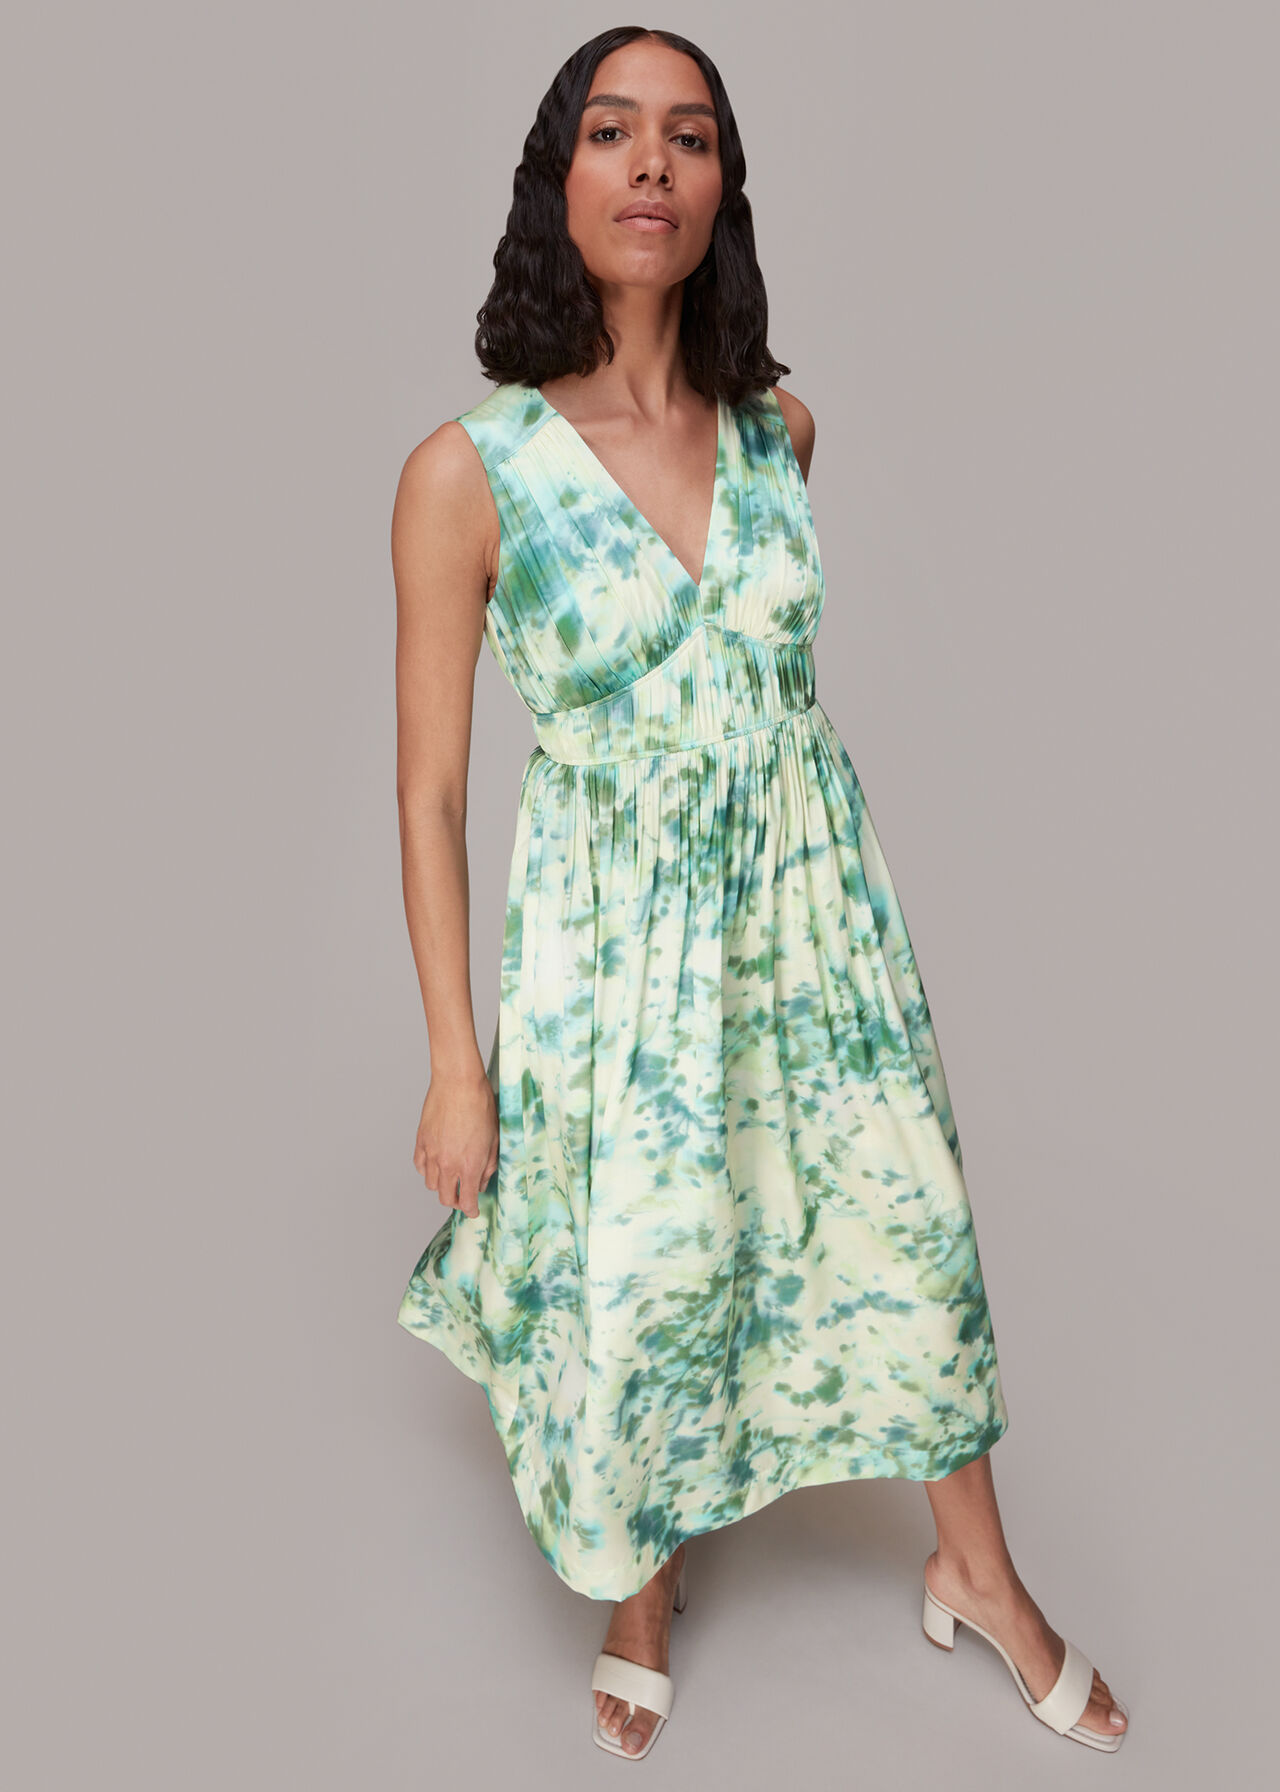 Waterflower Silk Mix Dress